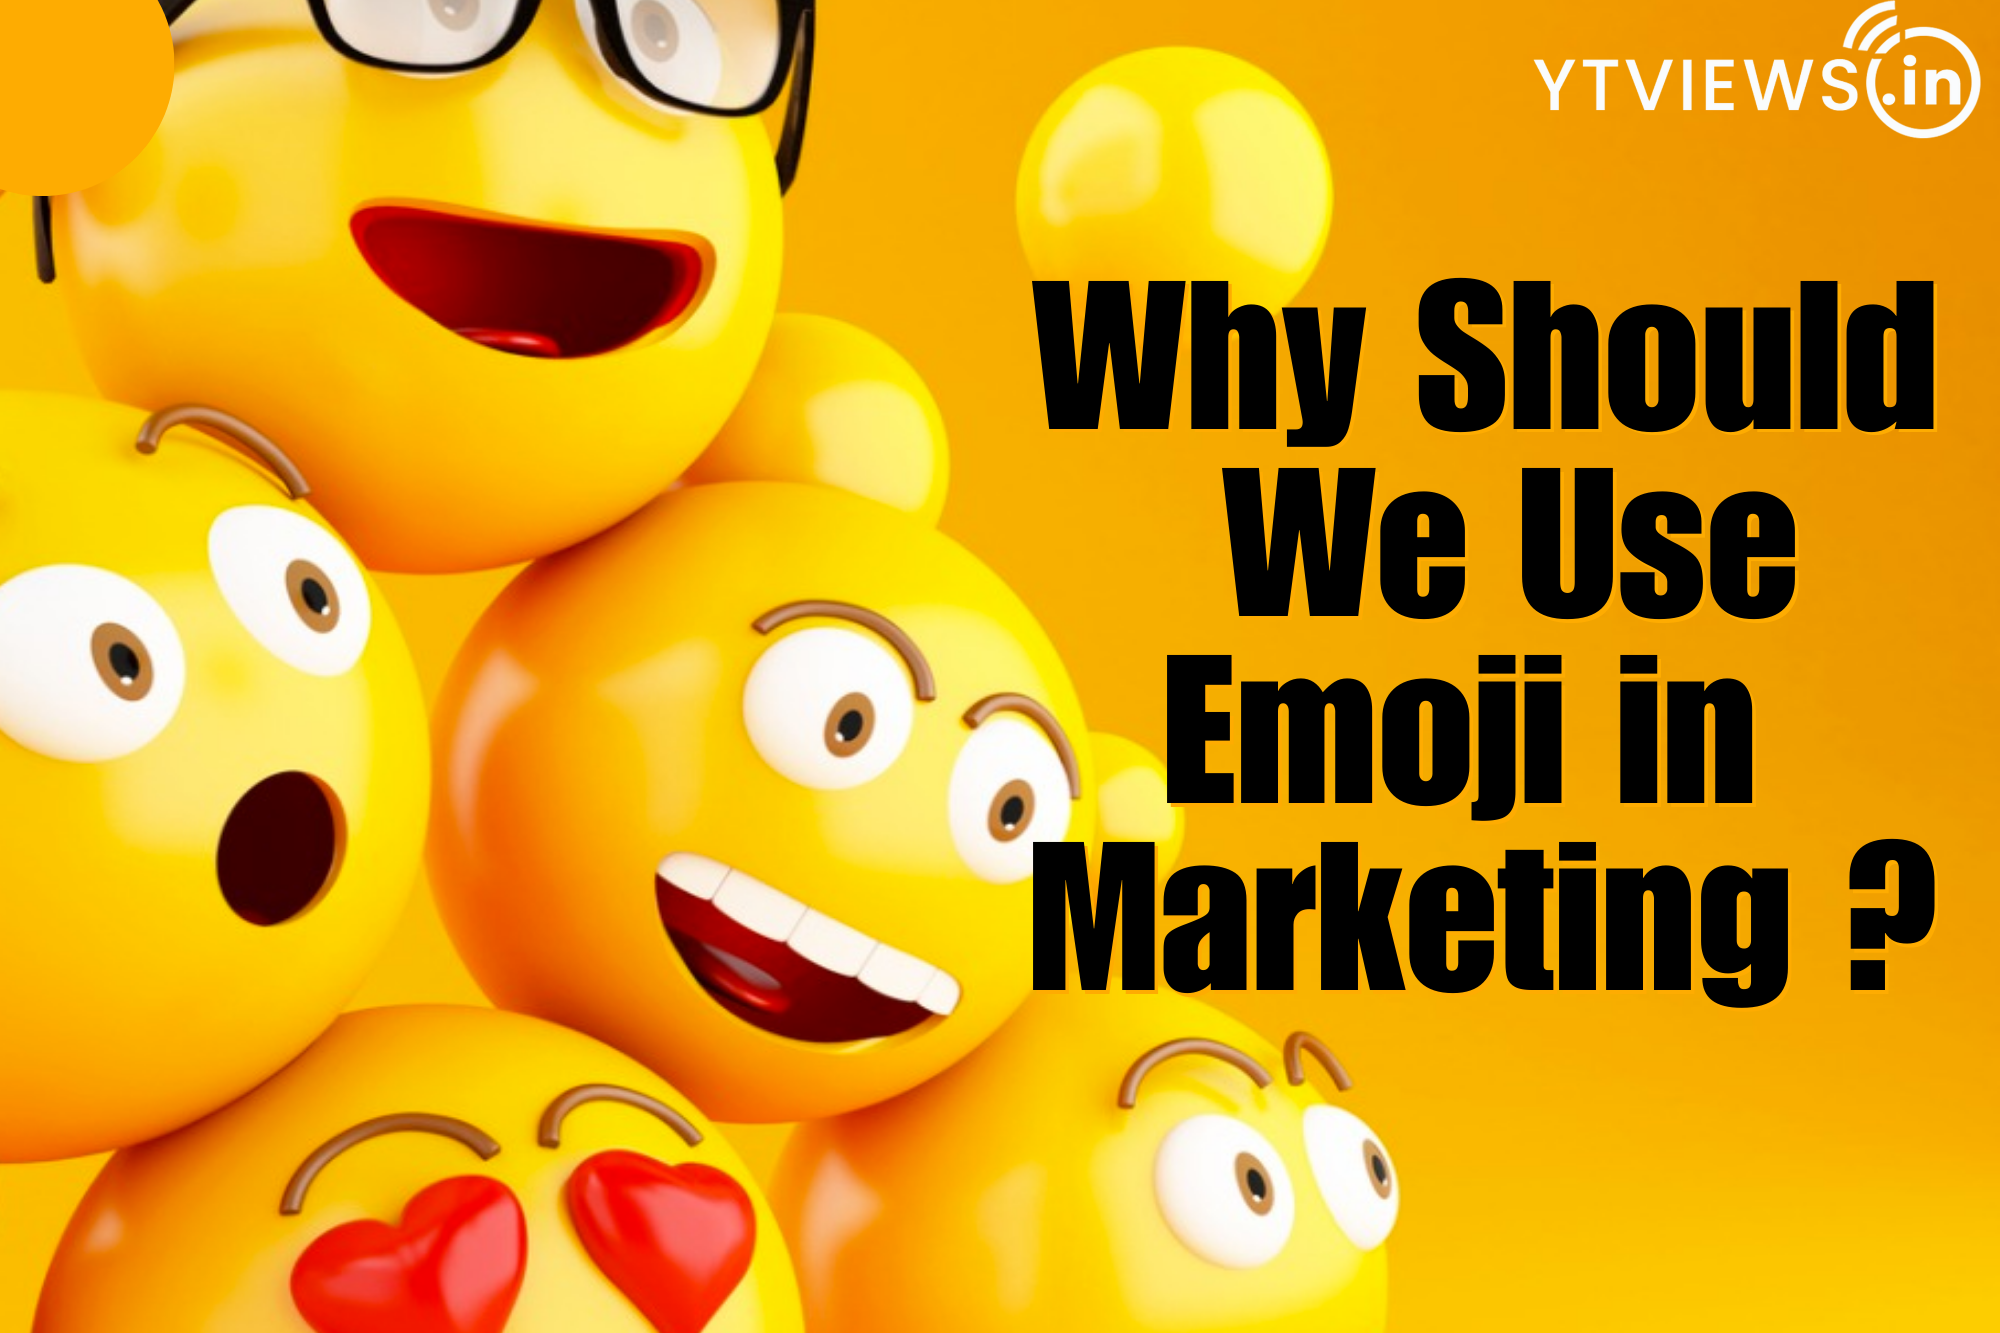 Why should we use emoji in marketing?